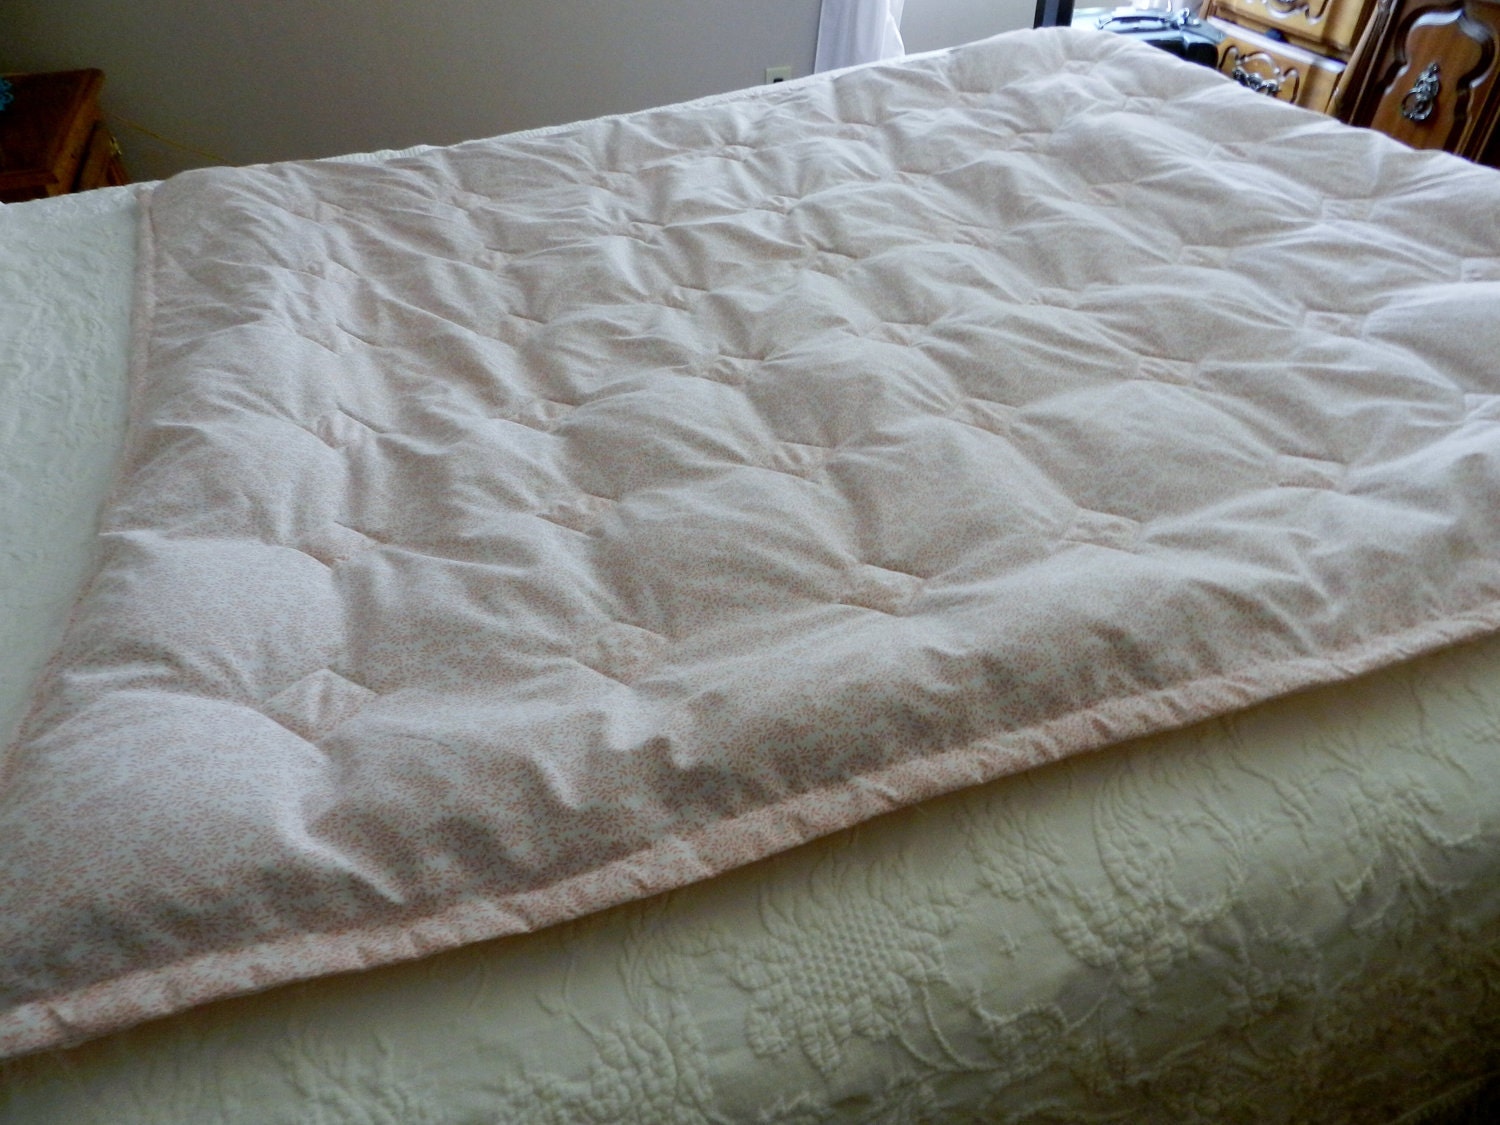 laura ashley down alternative mattress topper